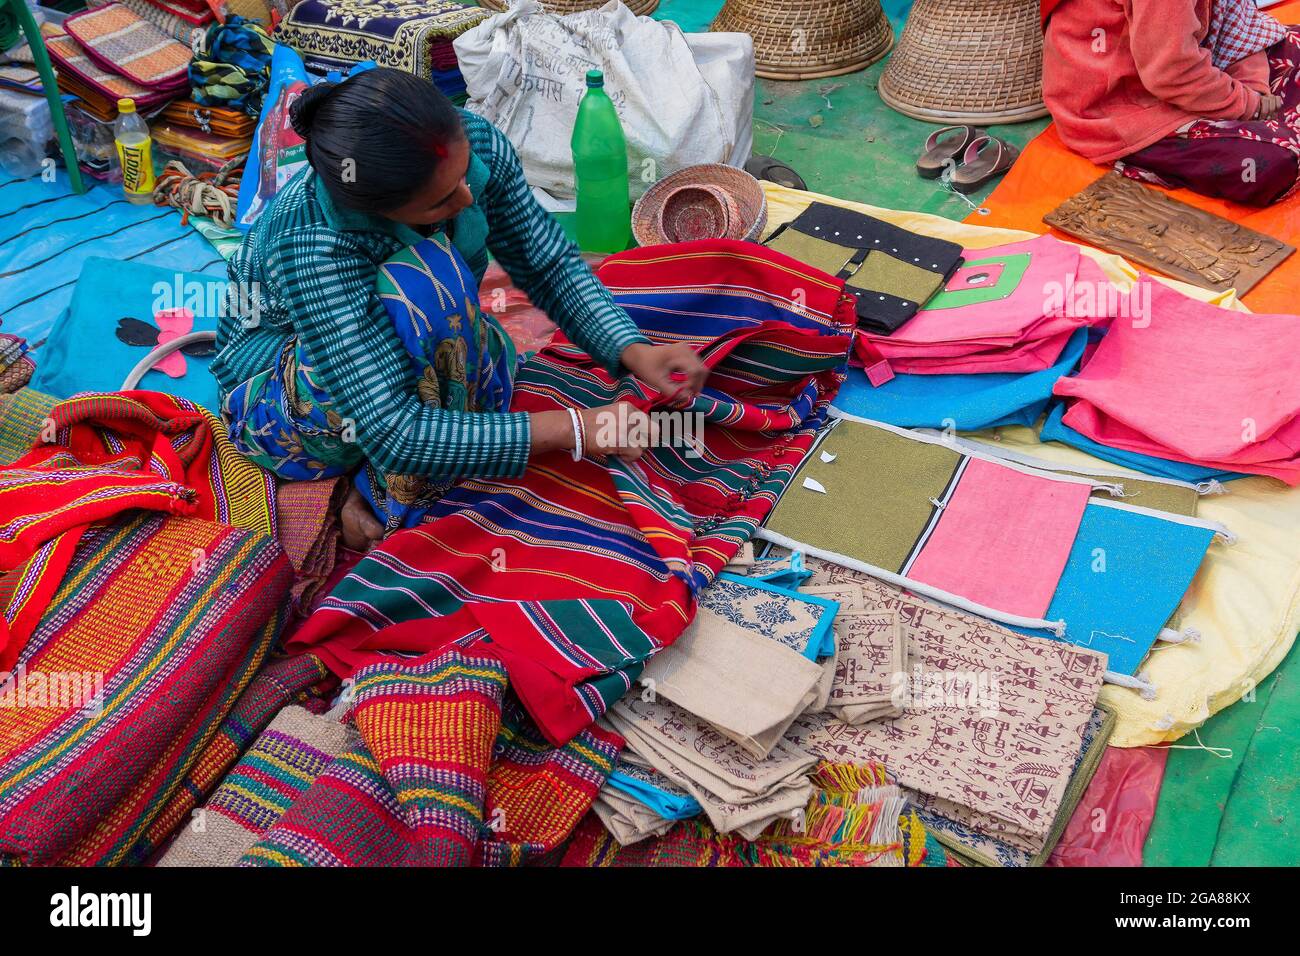 Kolkata, West Bengal, India - 31st December 2018 : Young Bengali woman selling carpets, door mats, handicraft products at hastashilpomela or handicraf Stock Photo